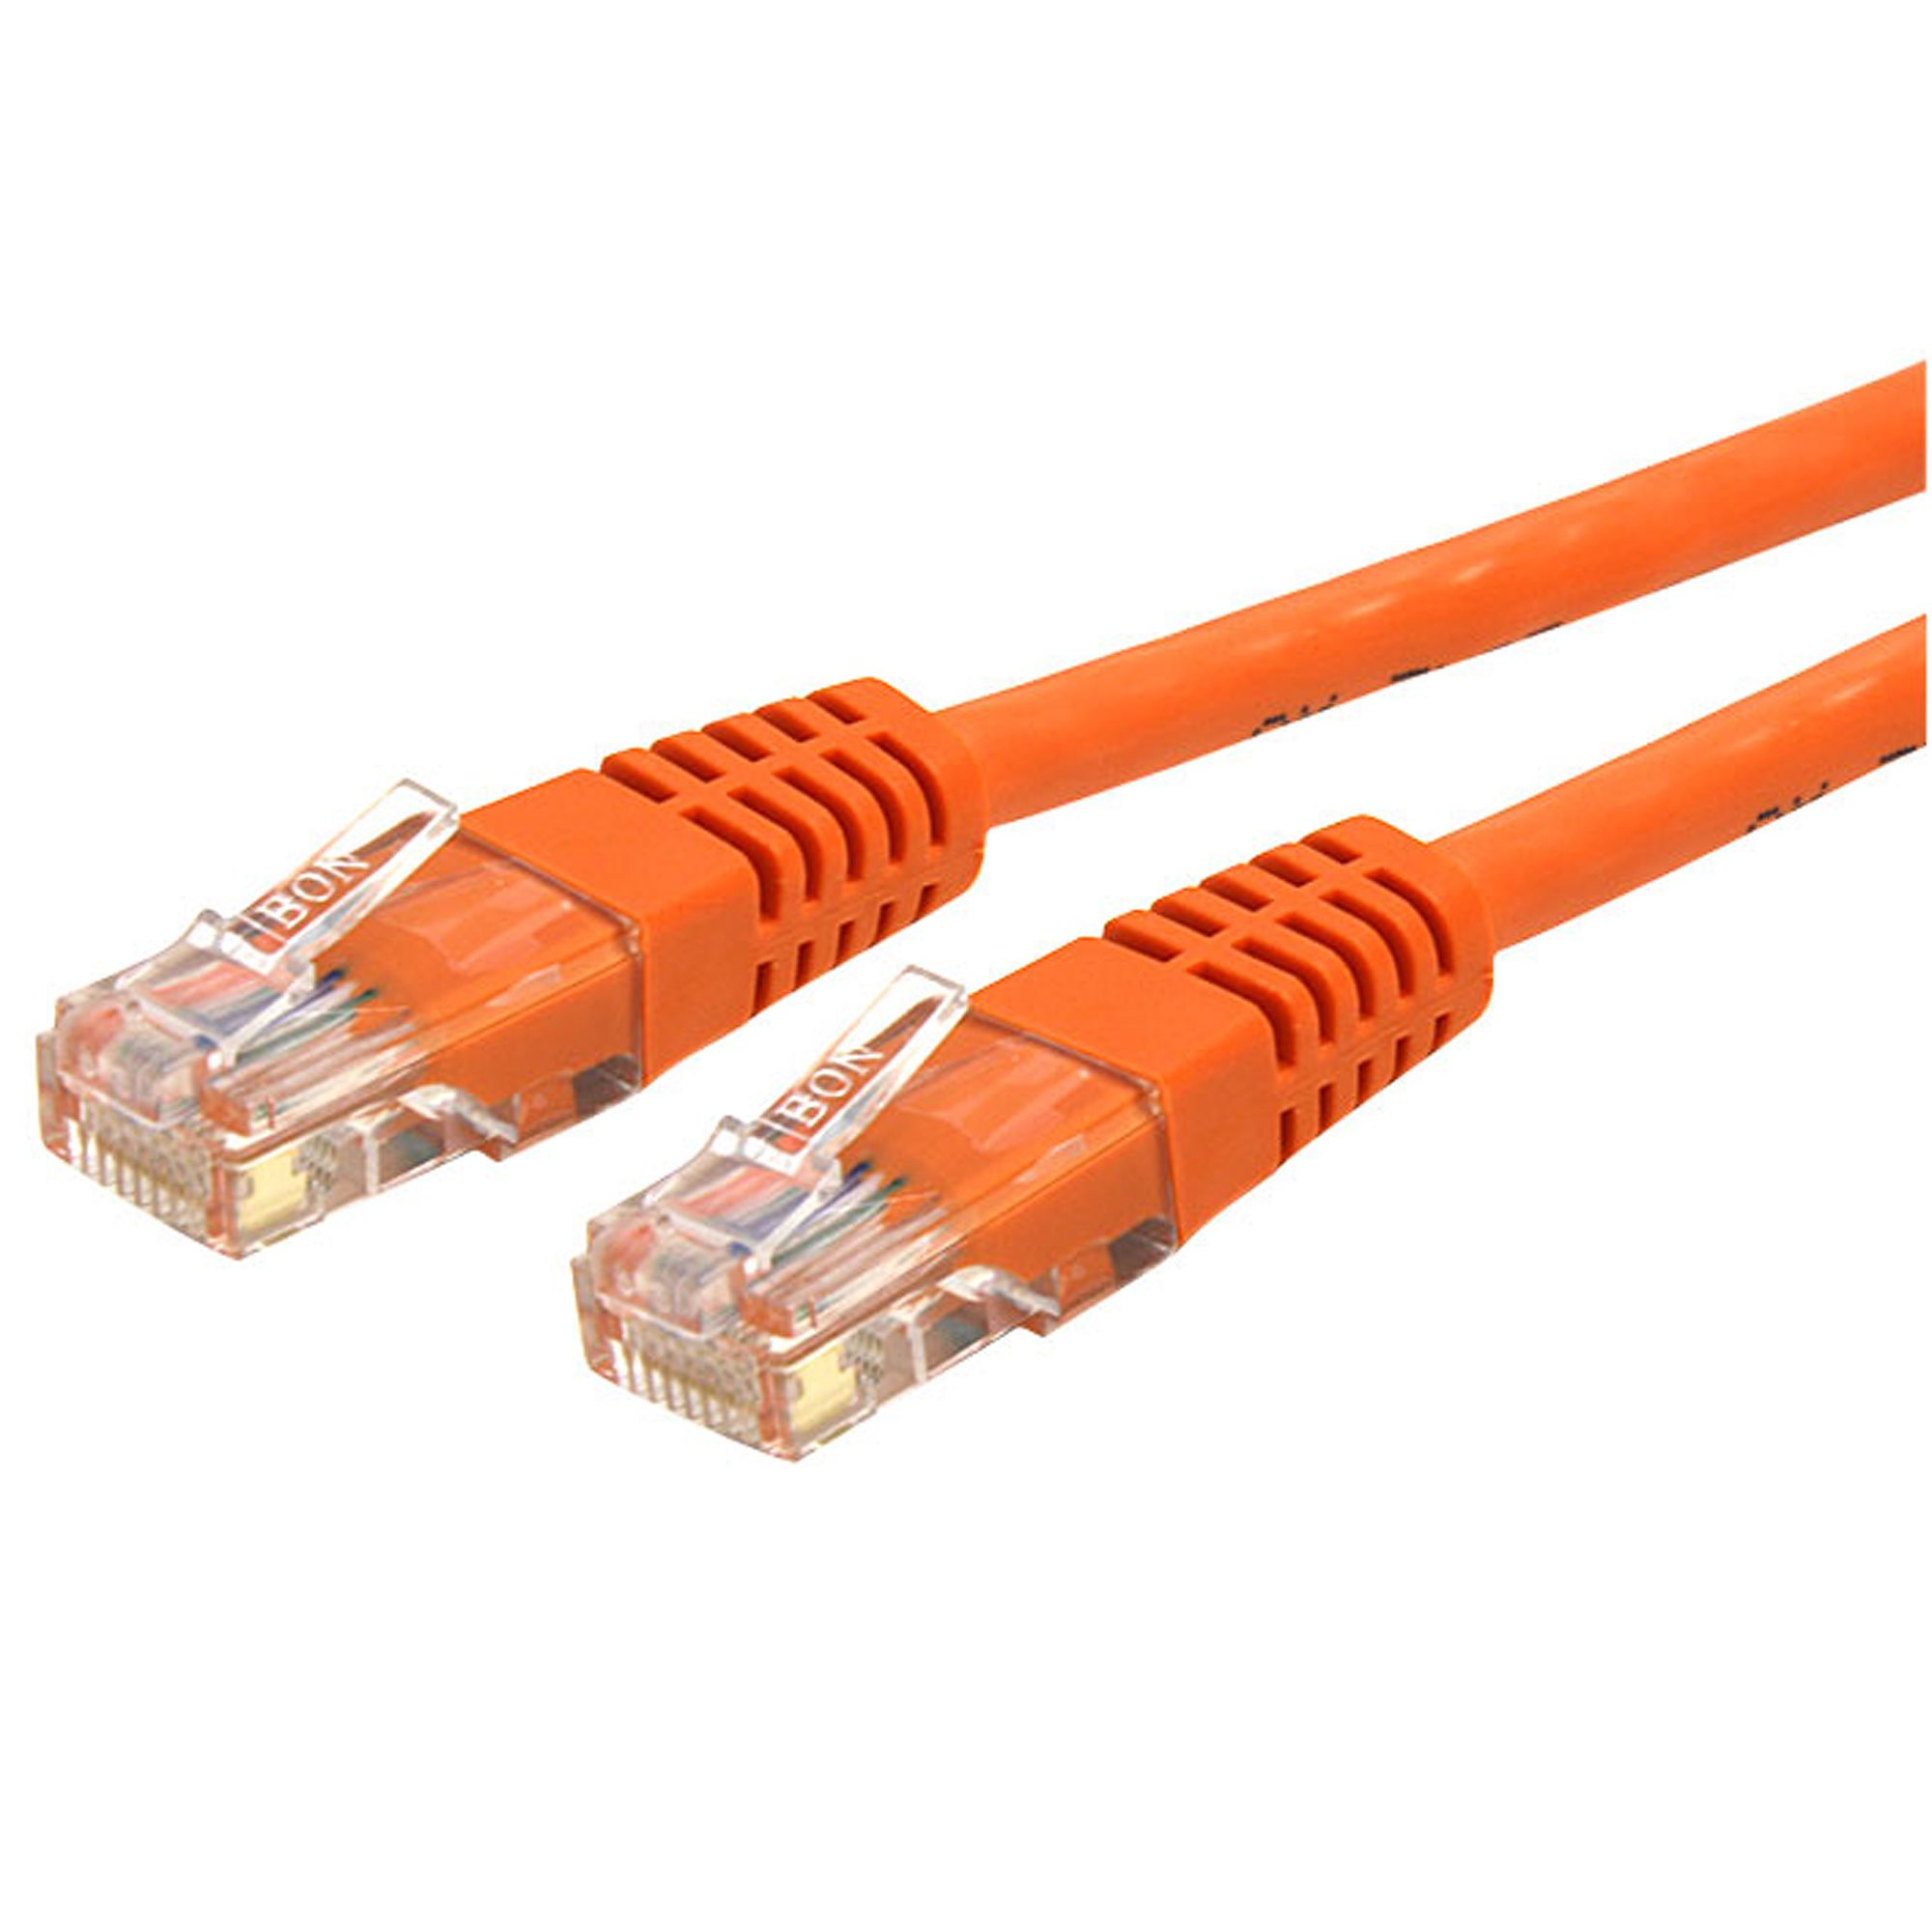 Cable 6M Gigabit  Red  Cat6 Utp Rj45  Naranja  Startech C6Patch20Or